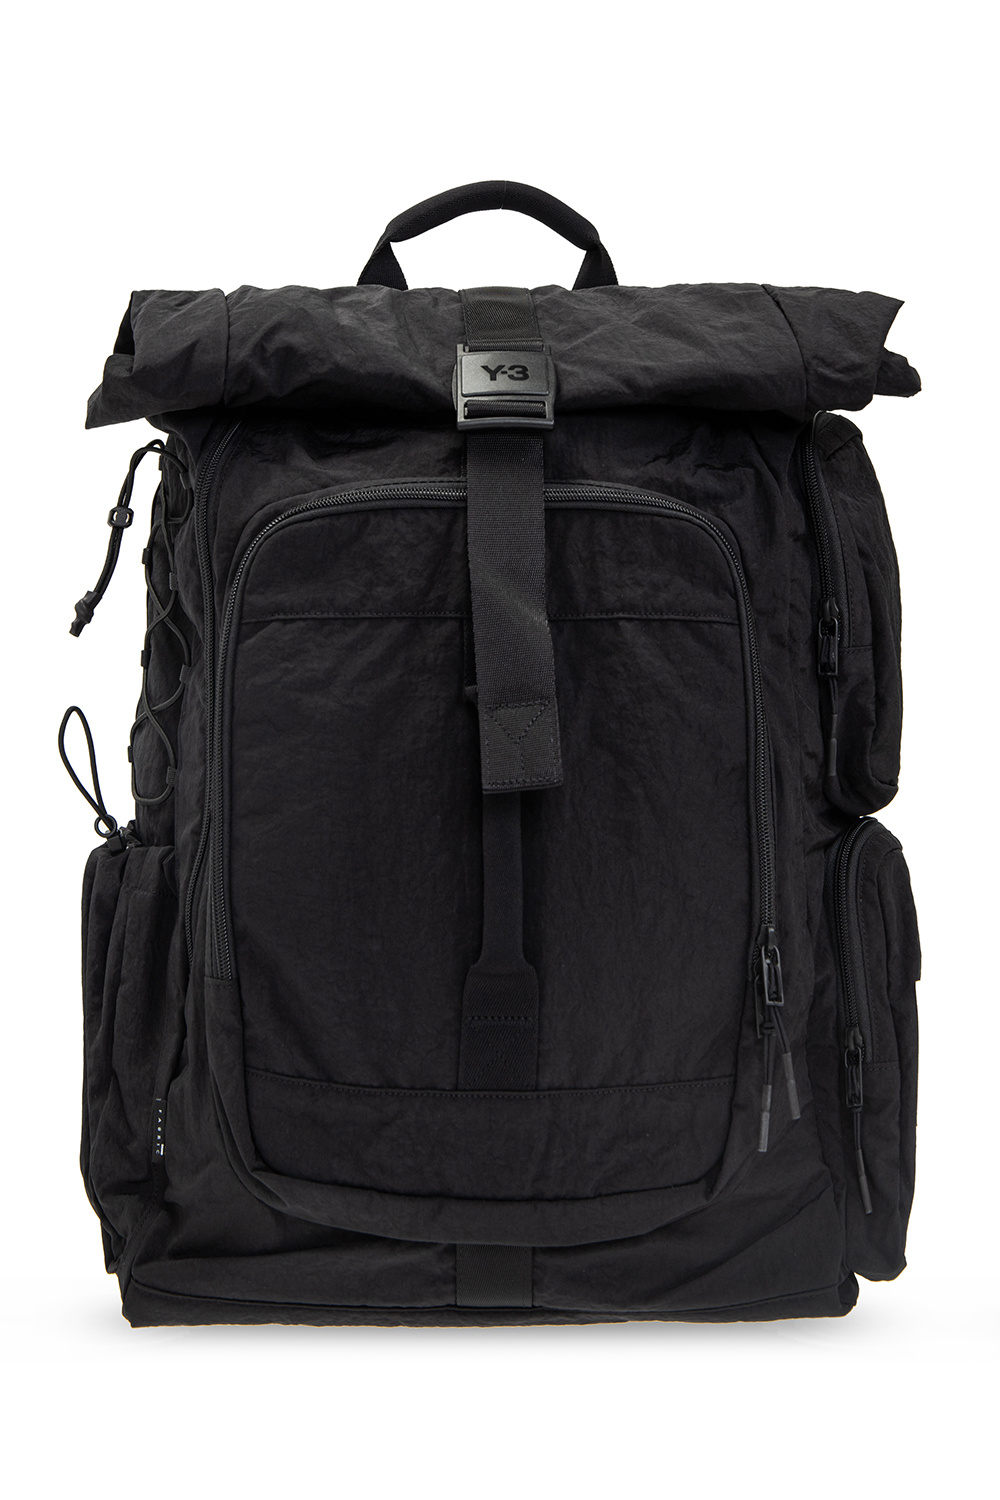 Backpack Travel with pockets Y - 3 Yohji Yamamoto - IetpShops